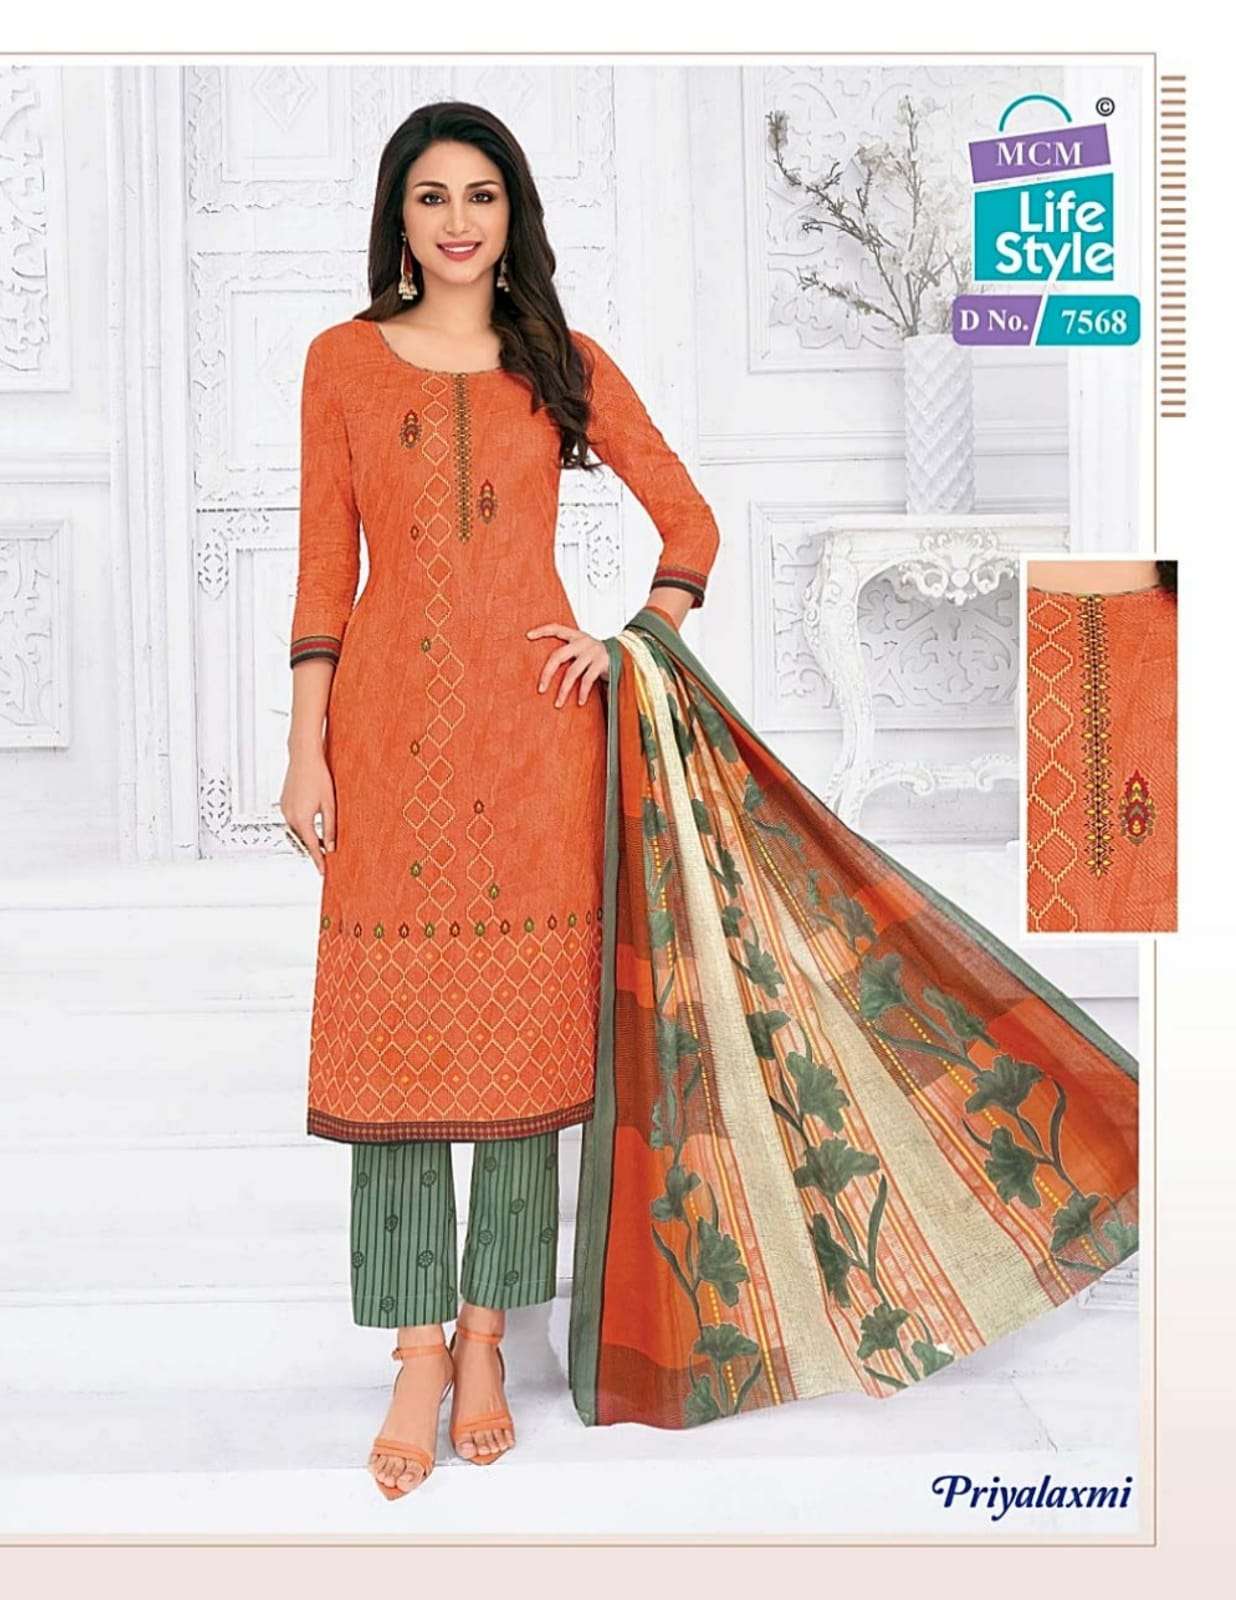 Priyalaxmi Vol 21 By Mcm Lifestyle Wholesaler Dress Materials In Surat